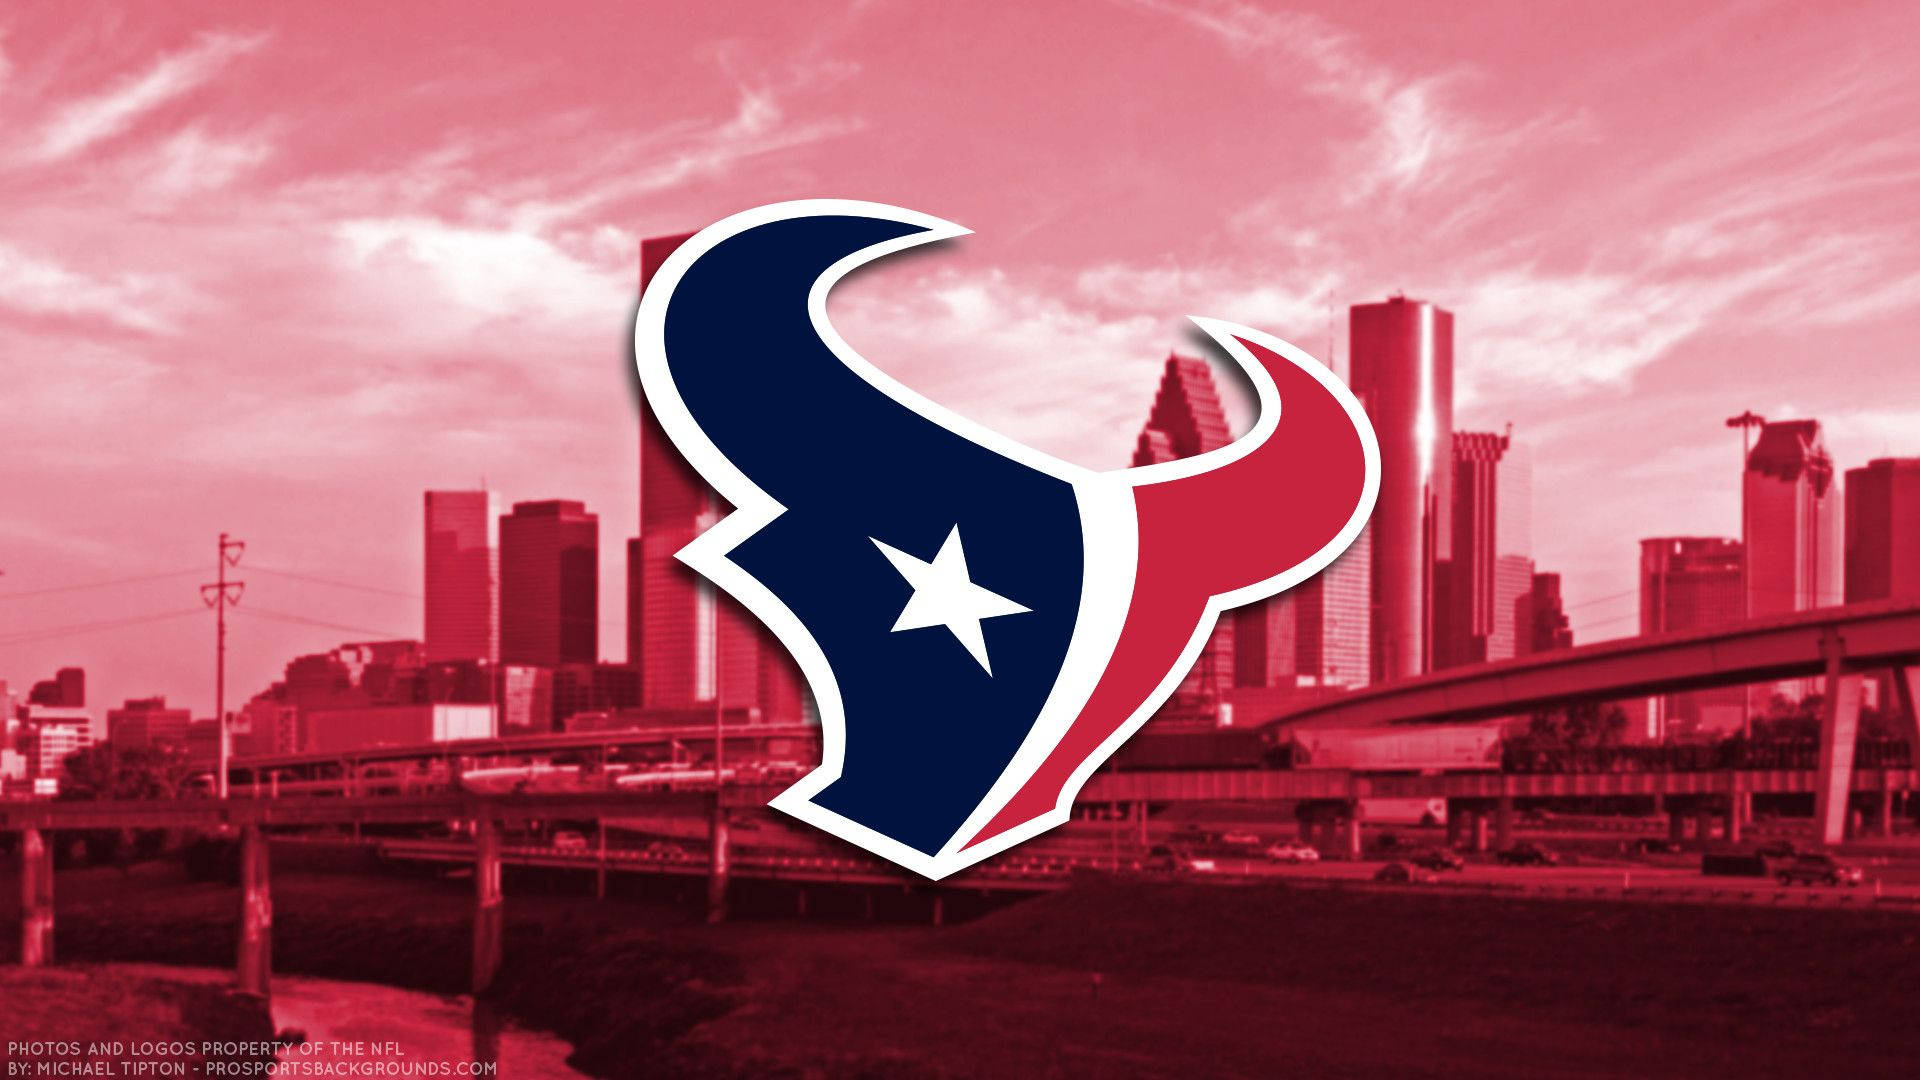 Houston Texans ready to take the field Wallpaper